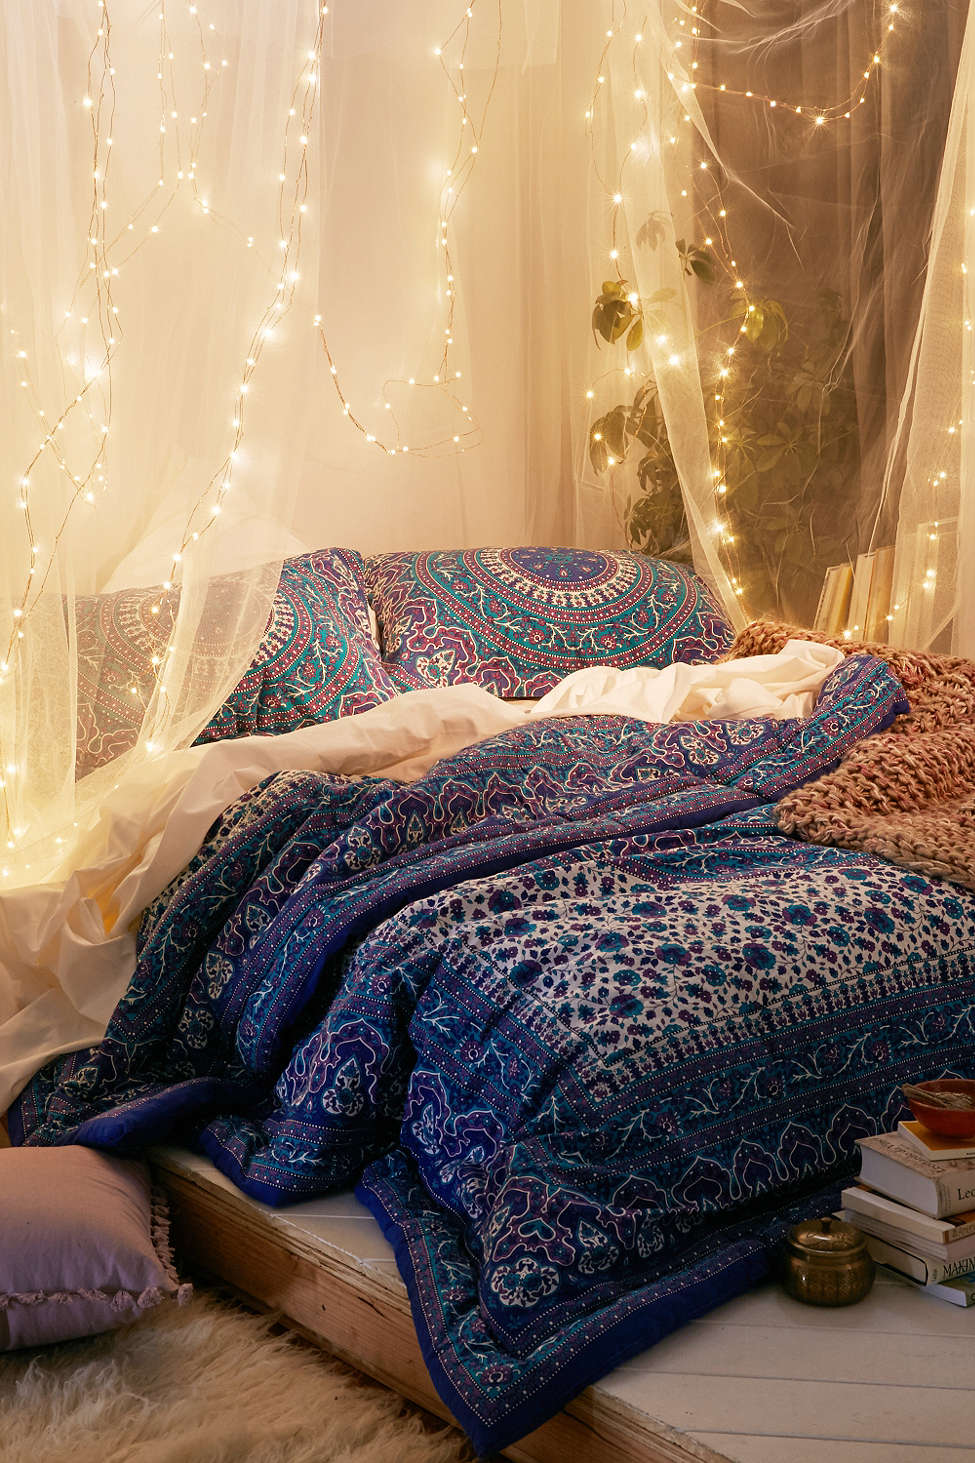 fairytale-lights-in-the-bedroom-dip-feed-2